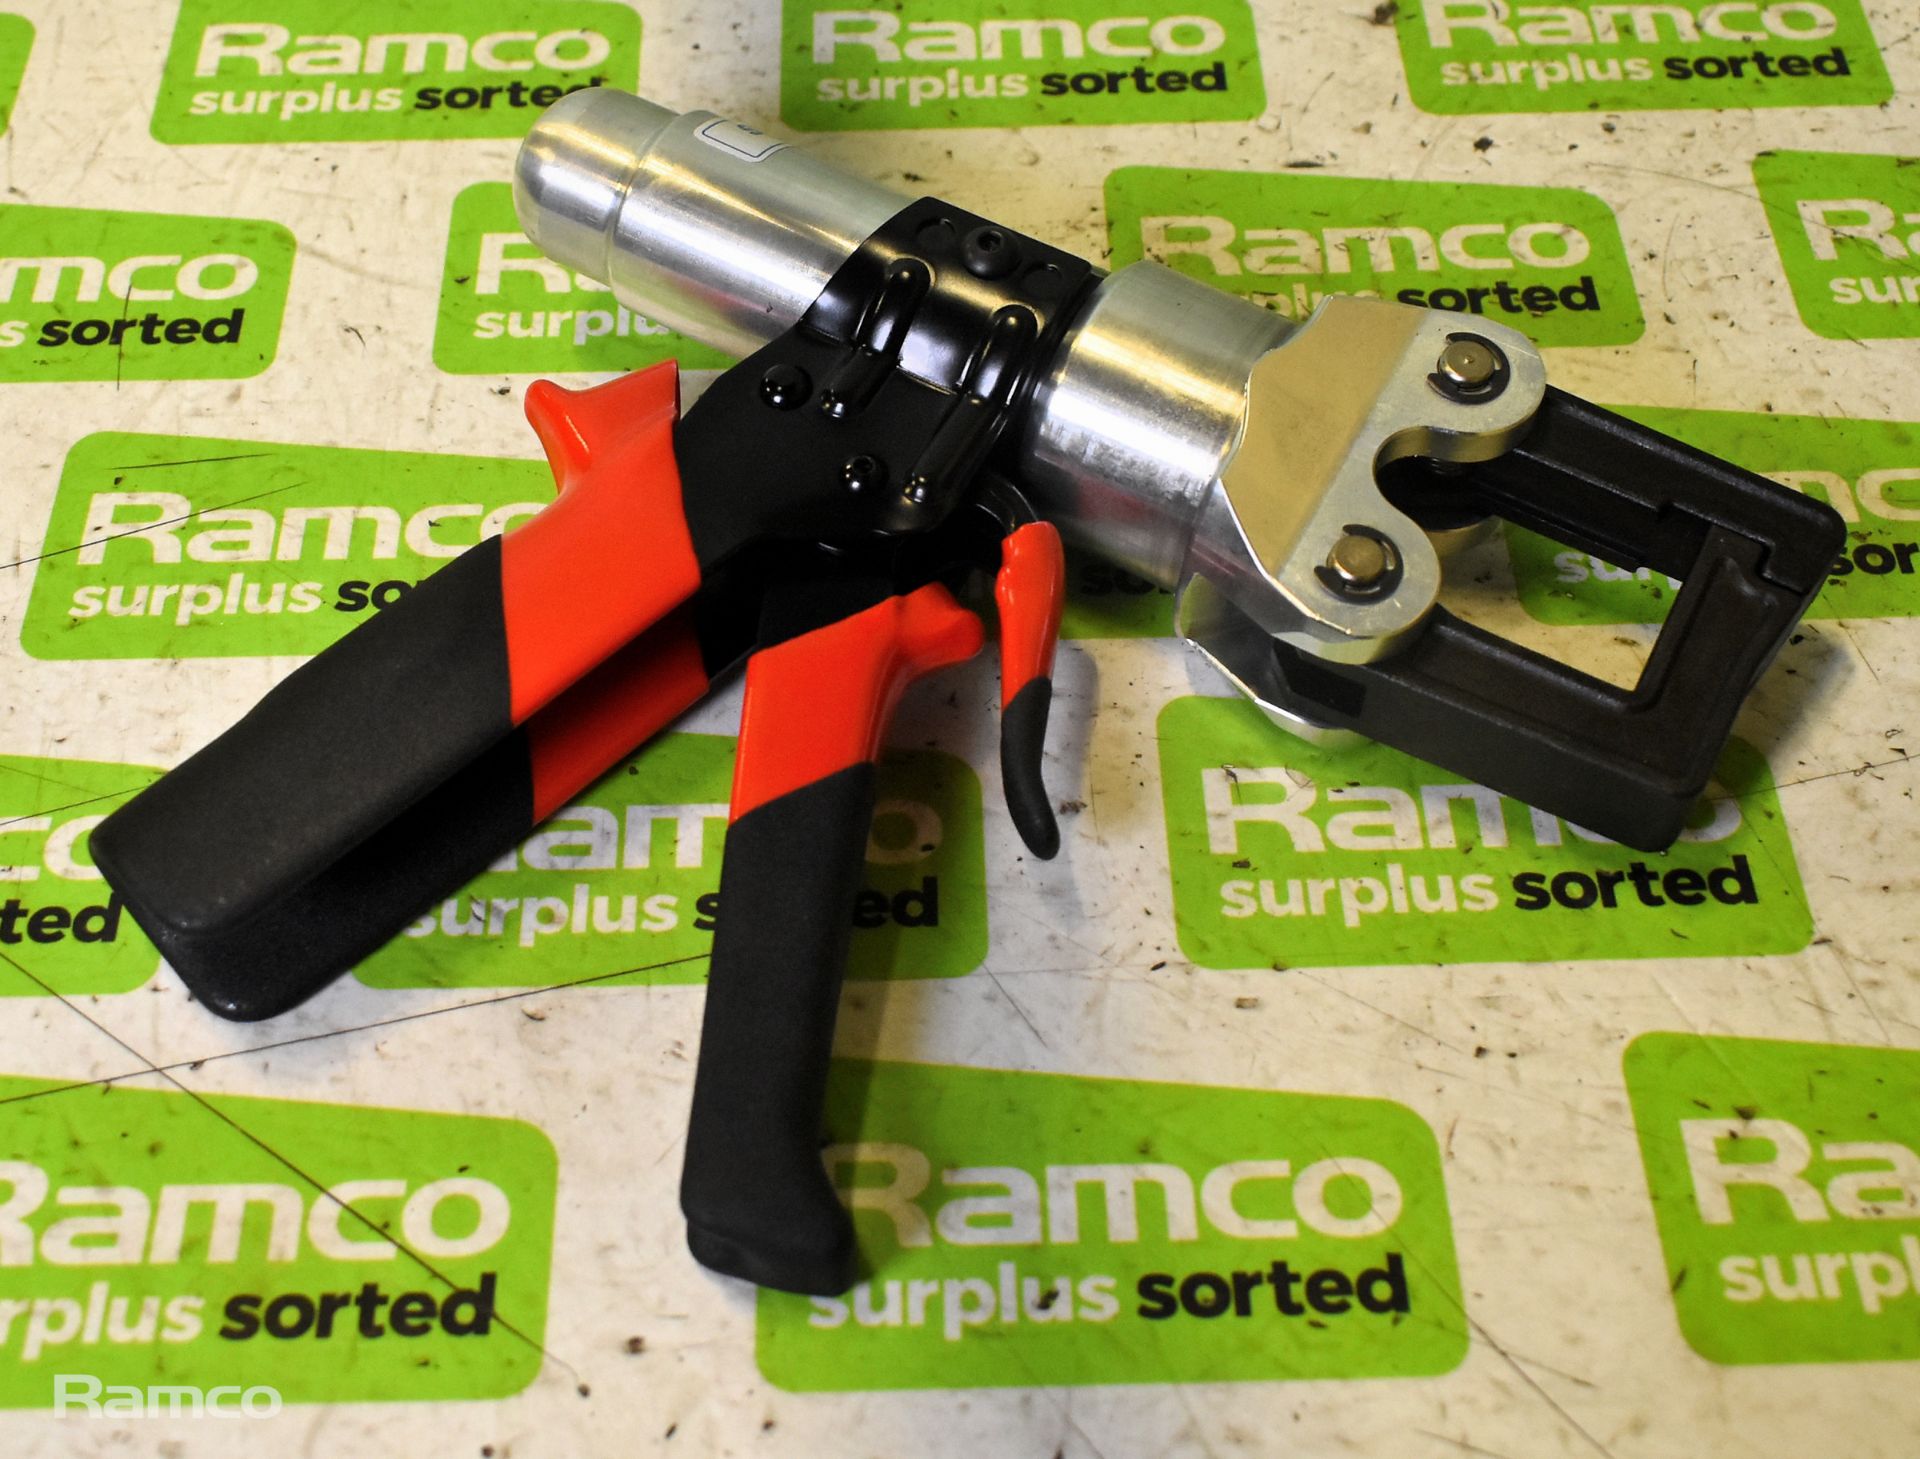 Glenair MRP0237 hand hydraulic crimping tool kit - Image 4 of 10